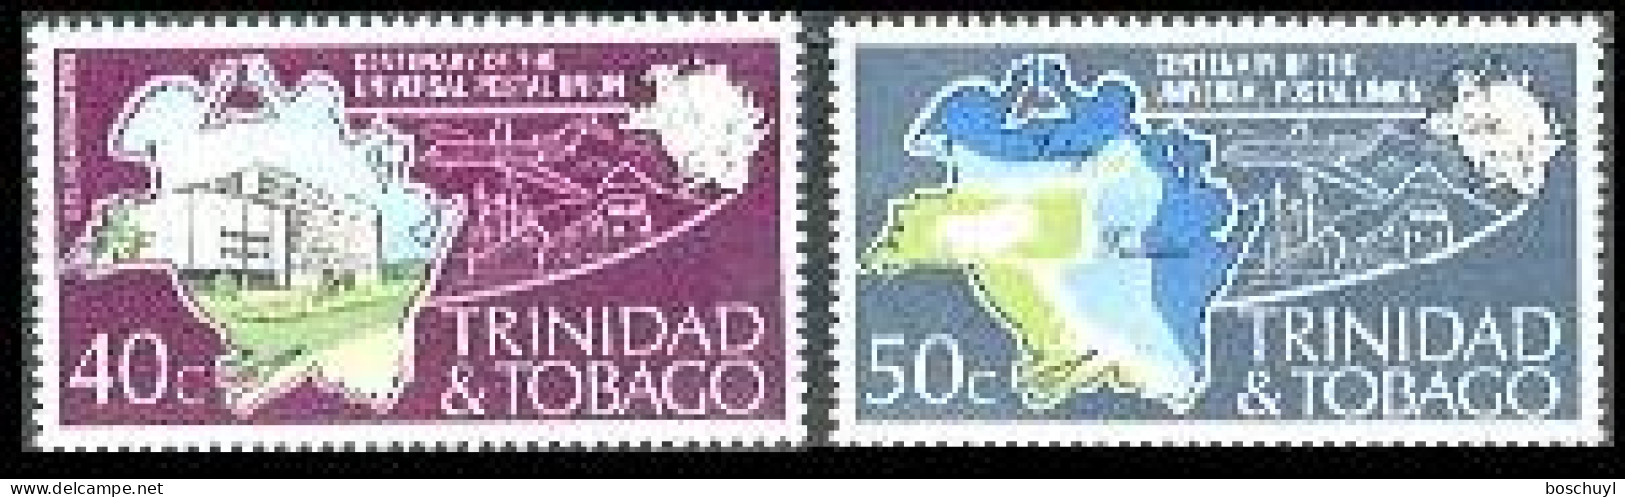 Trinidad And Tobago, 1974, UPU Centenary, Universal Postal Union, United Nations, MNH, Michel 328-329 - Trinidad & Tobago (1962-...)